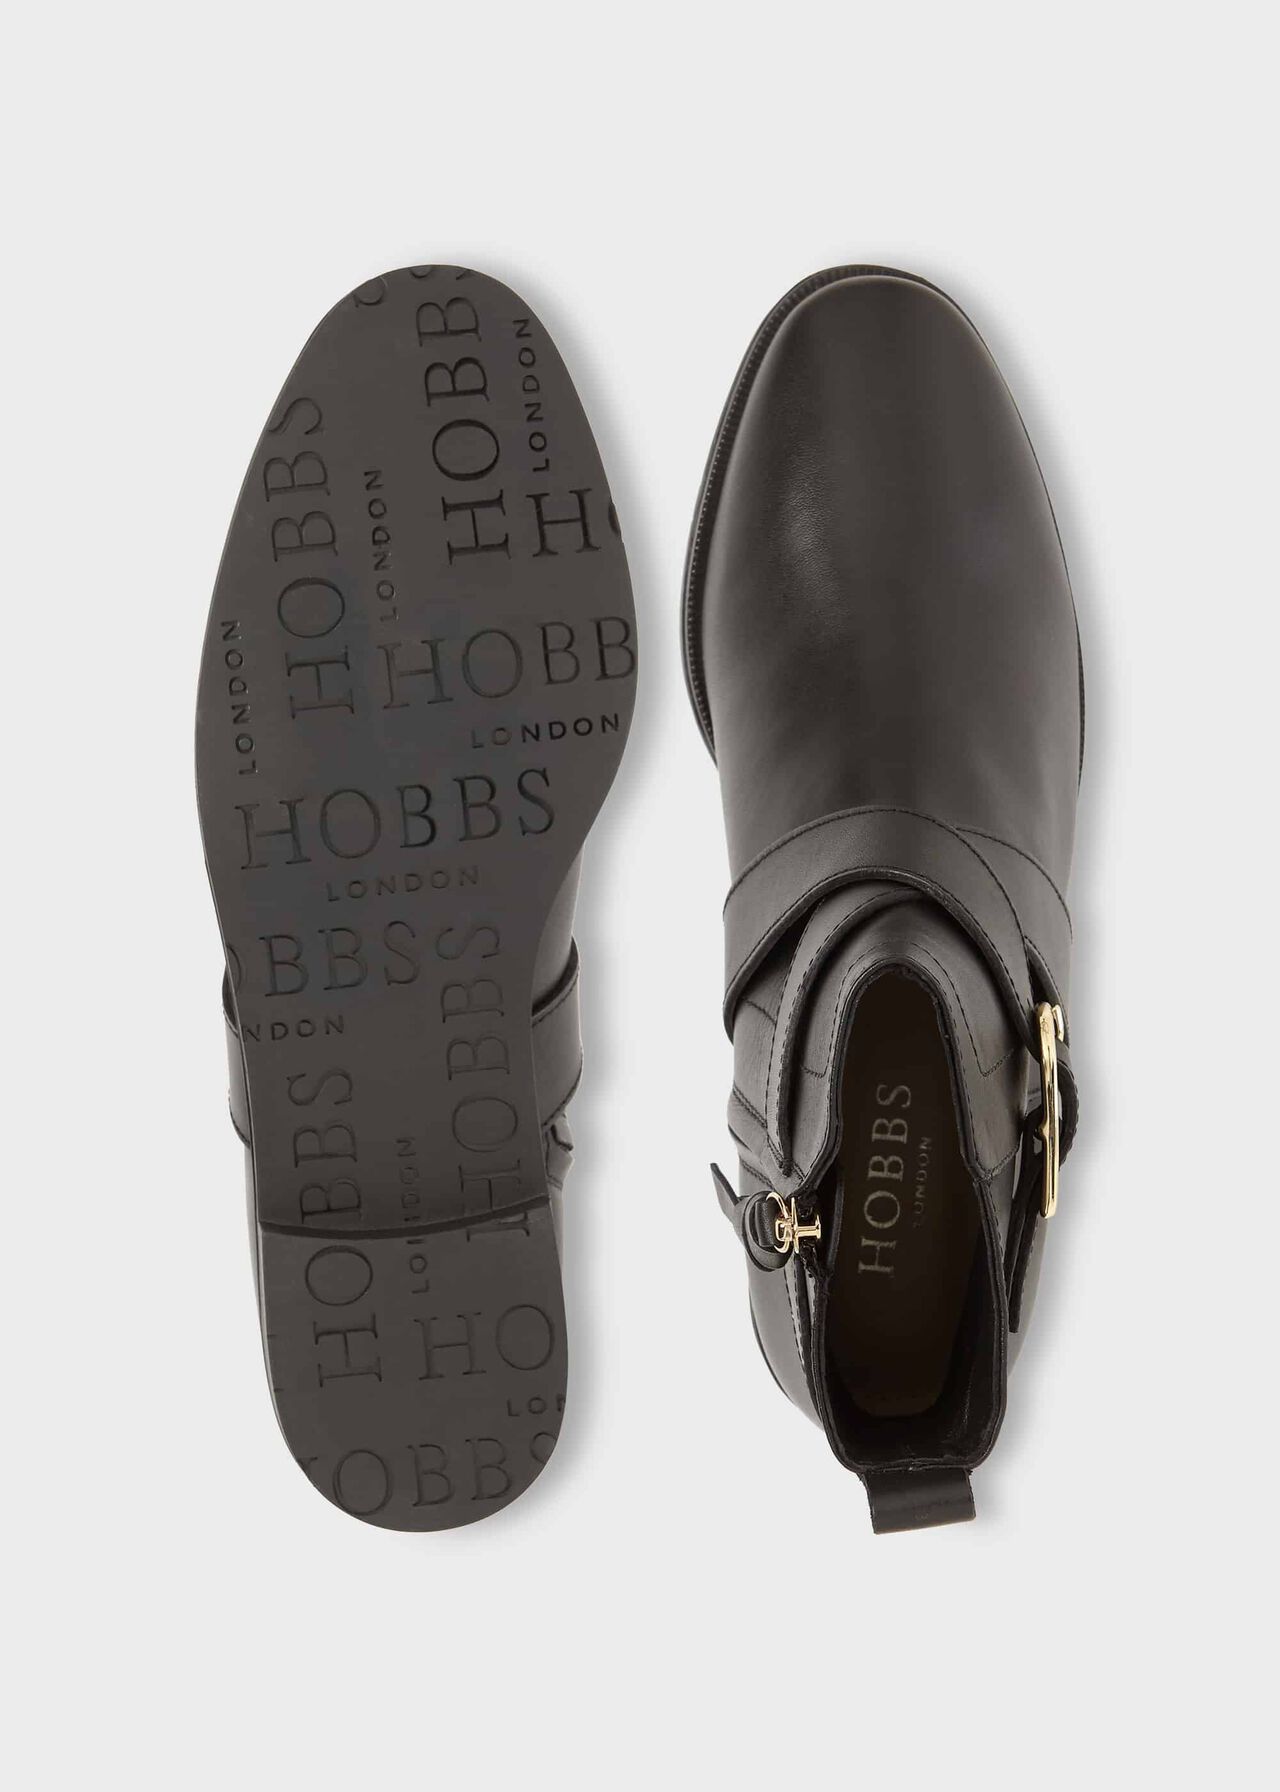 Ruthie Ankle Boots, Black, hi-res